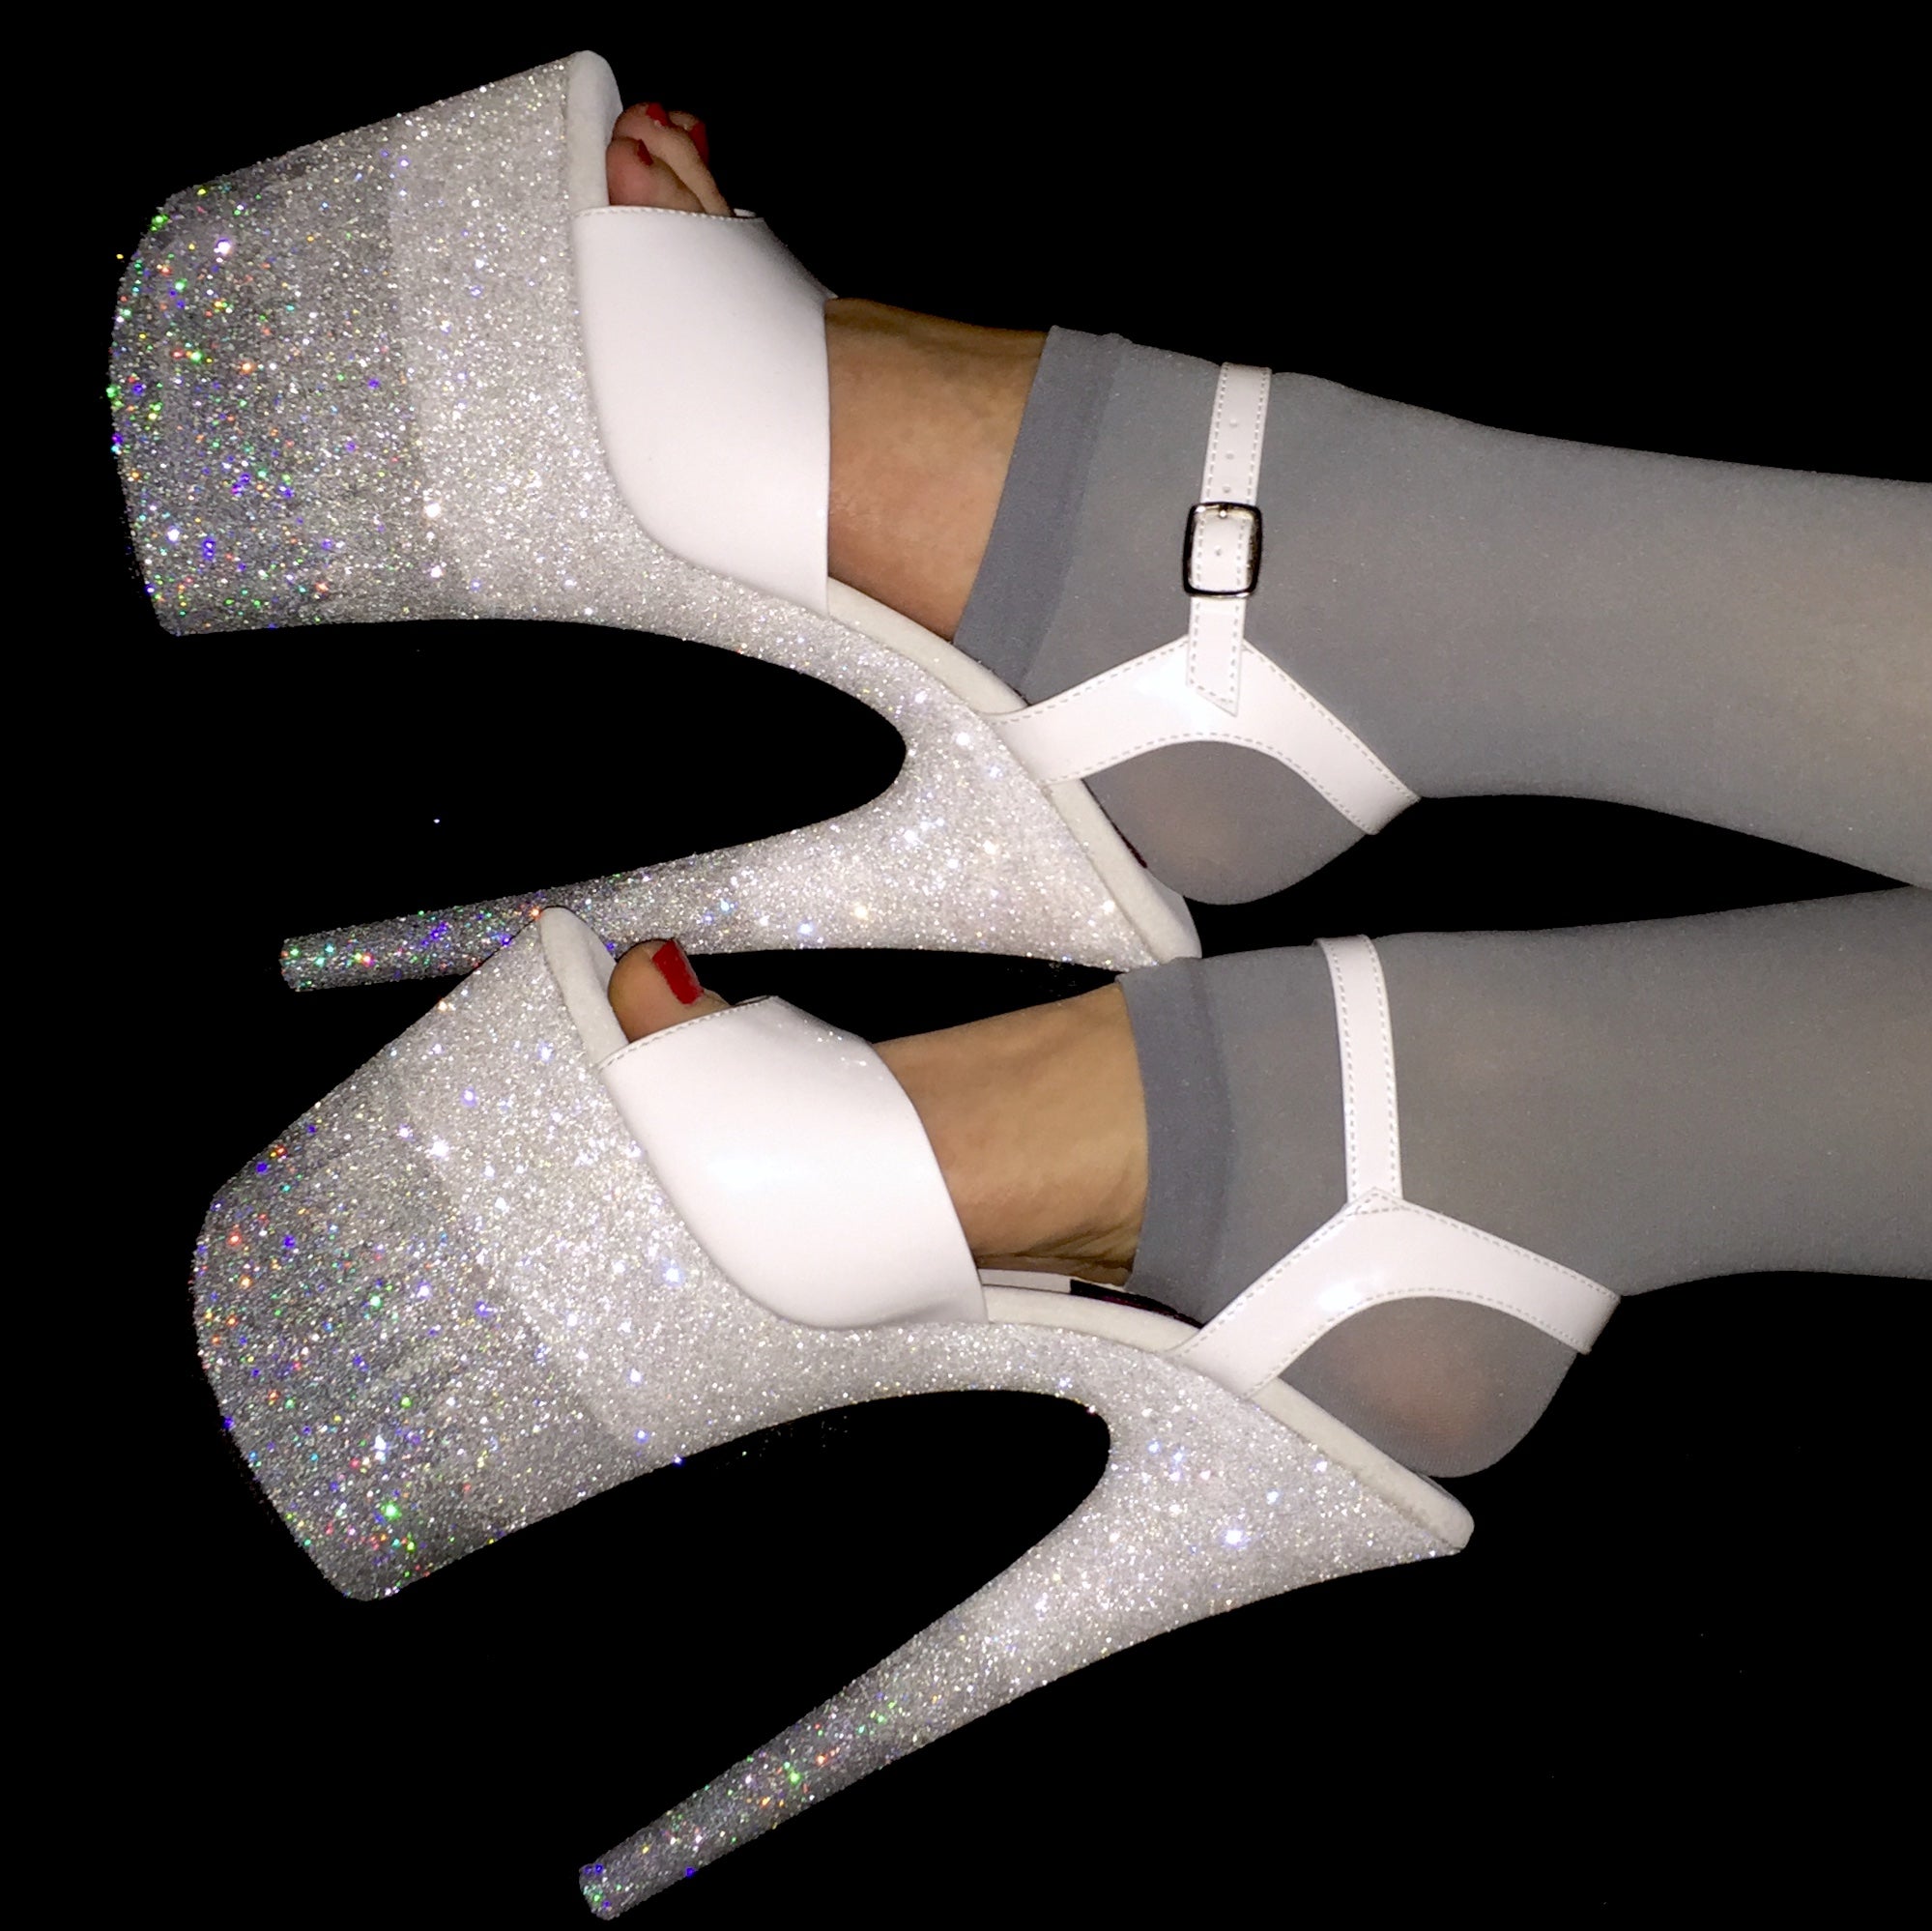 white glitter heels